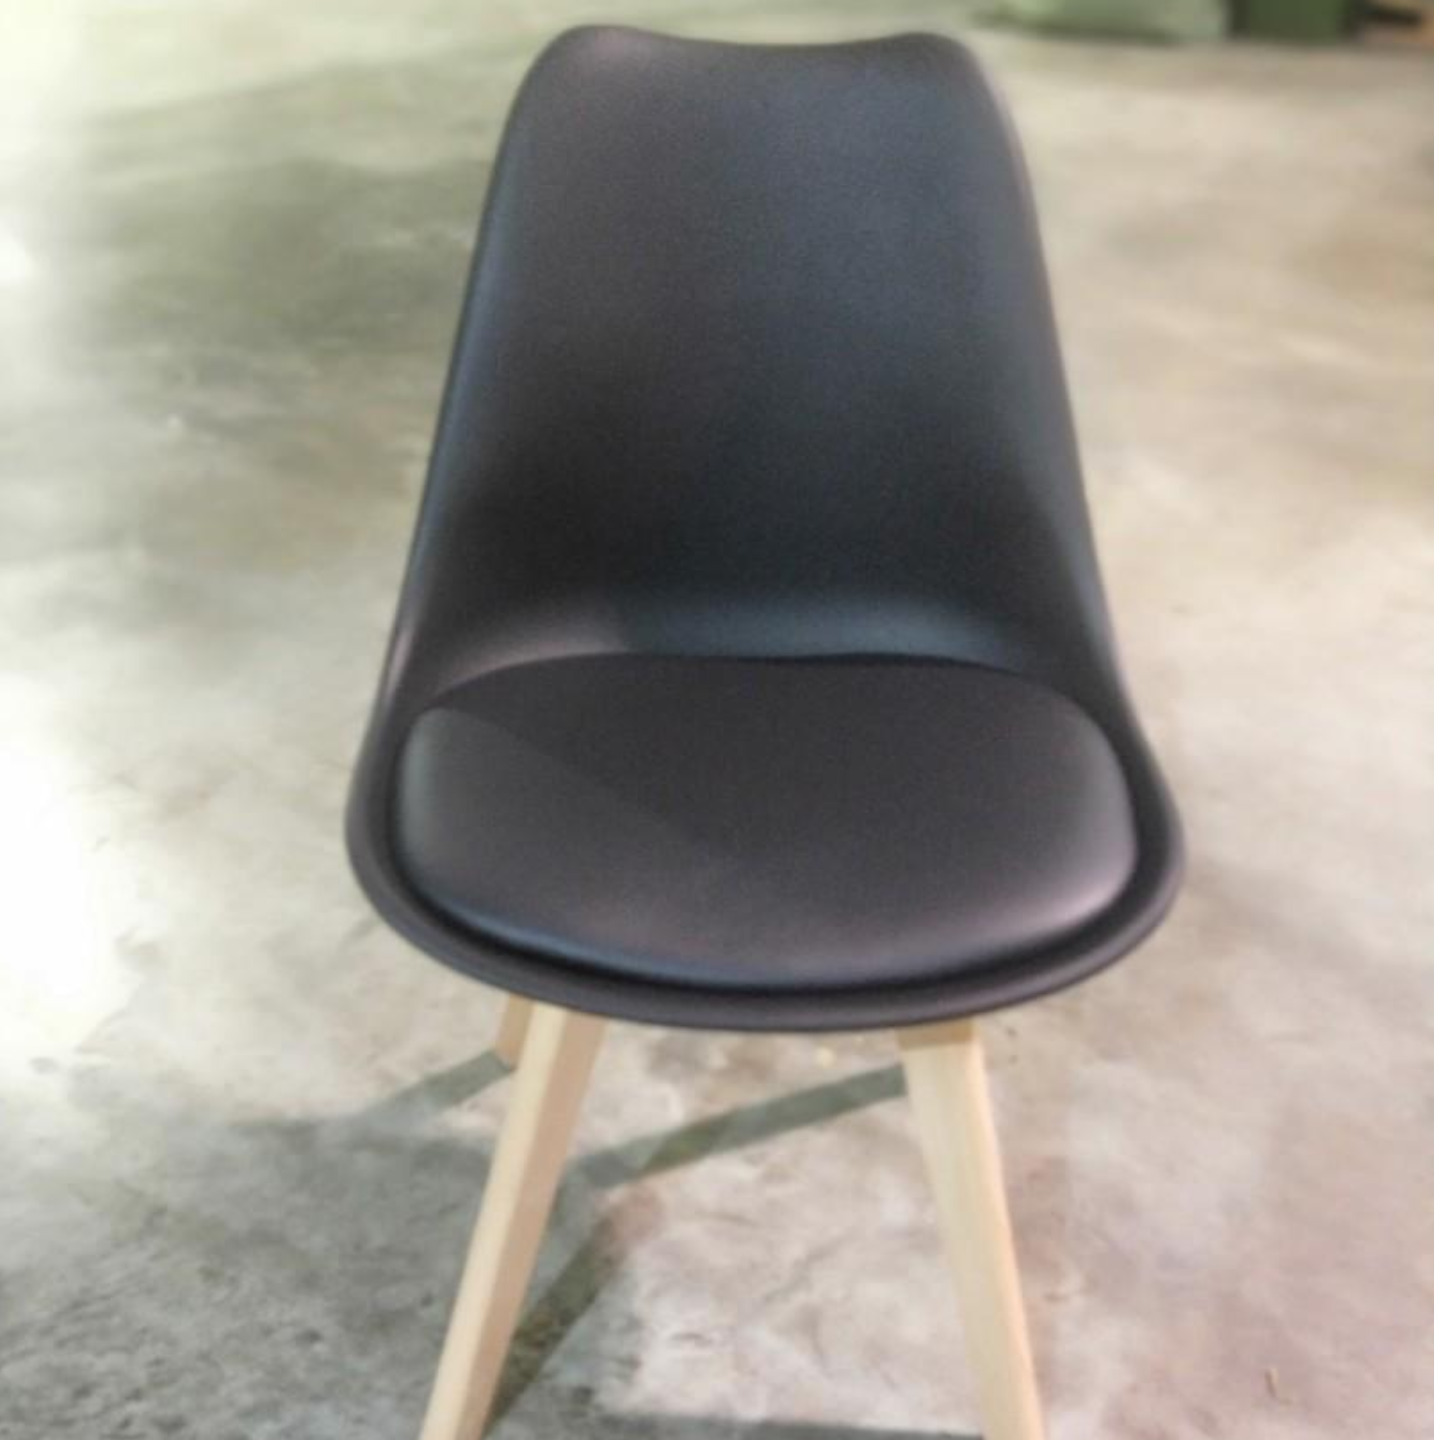 VENZ Designer Chair in BLACK PU with Wooden Frame SET